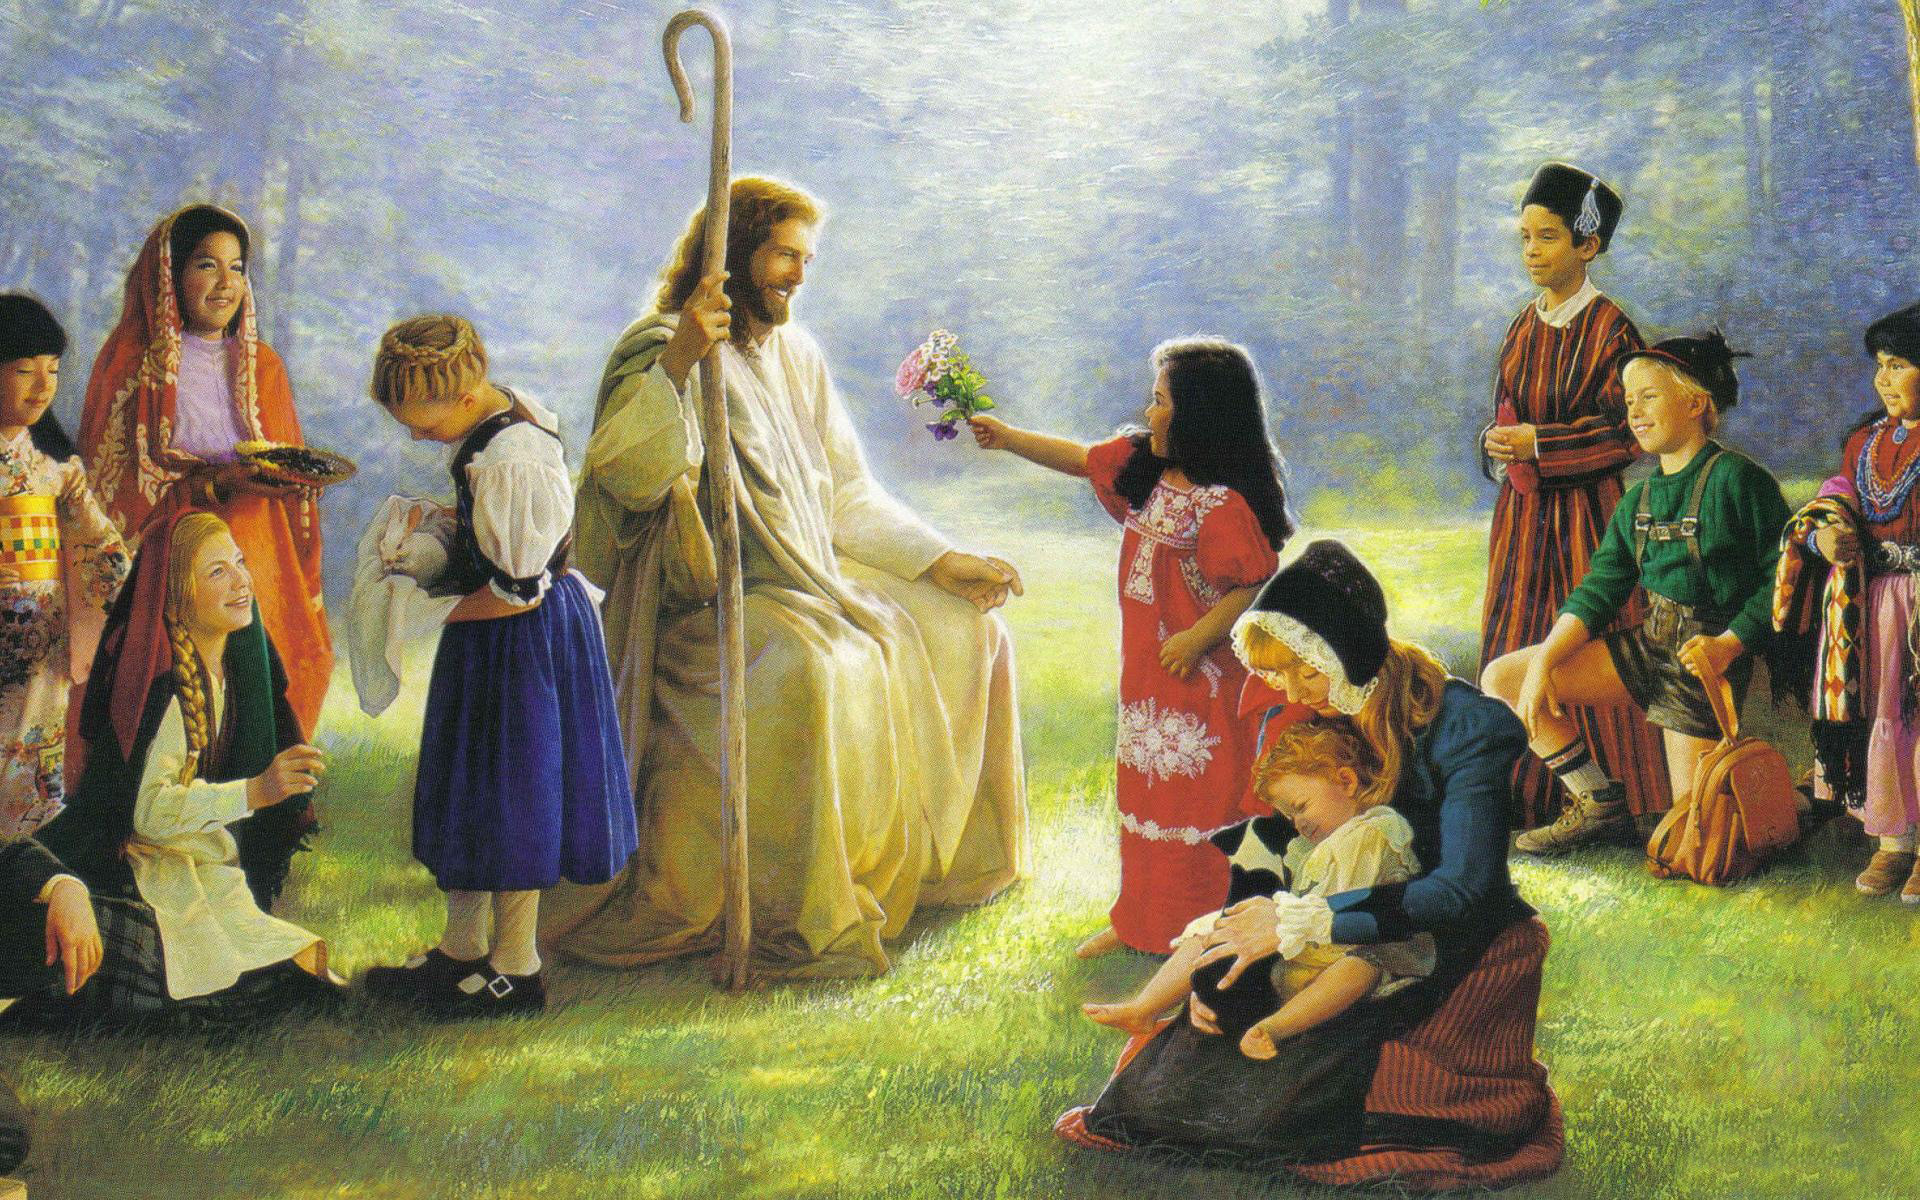 Christ And Children Puter Desktop Wallpaper Pictures Image